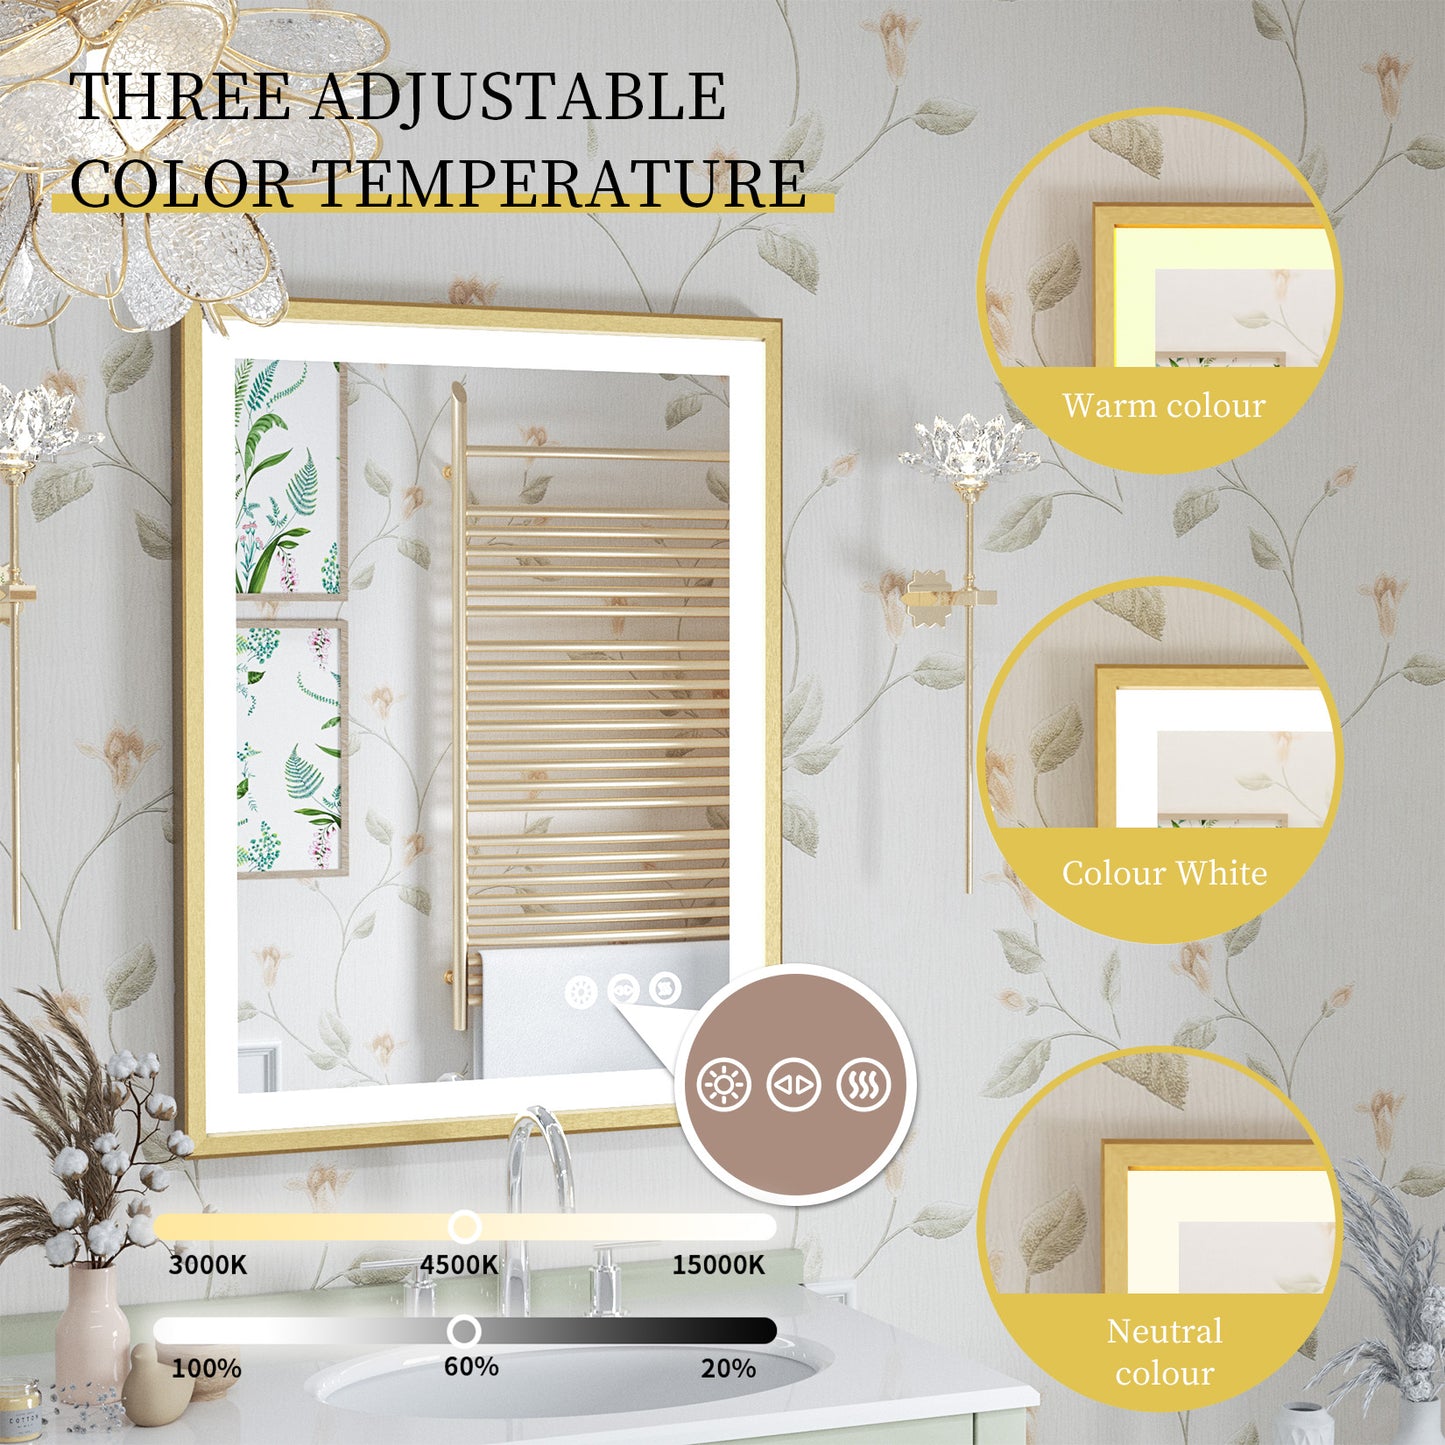 Gold Aluminum Frame Front-lit Bathroom Mirror